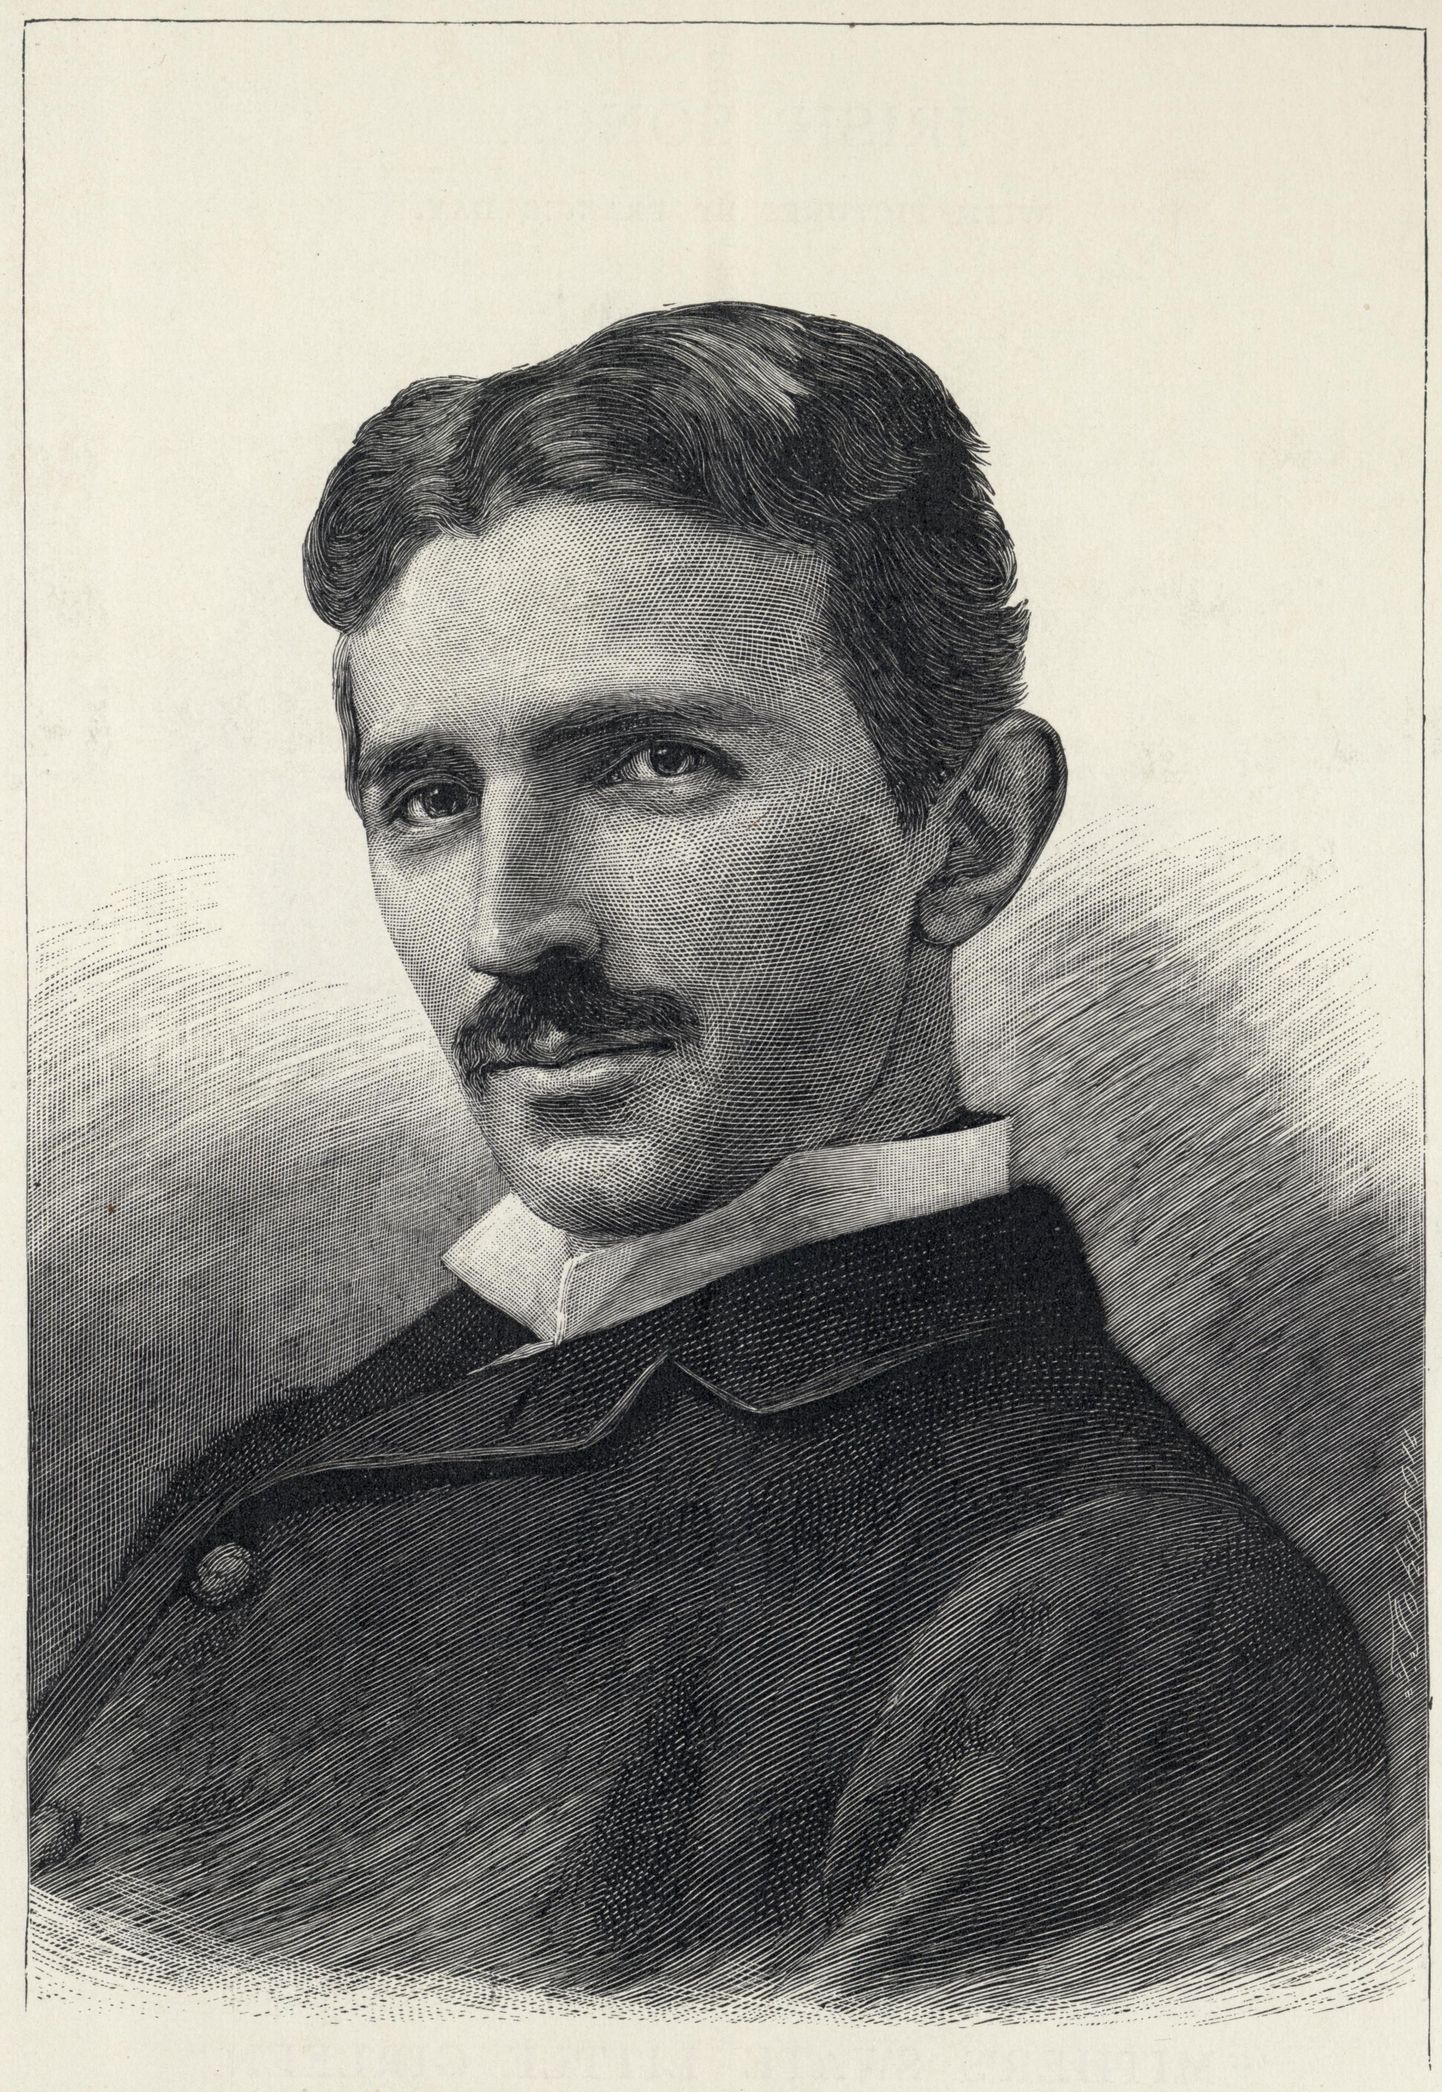 Nikola Tesla (1856 - 1943).